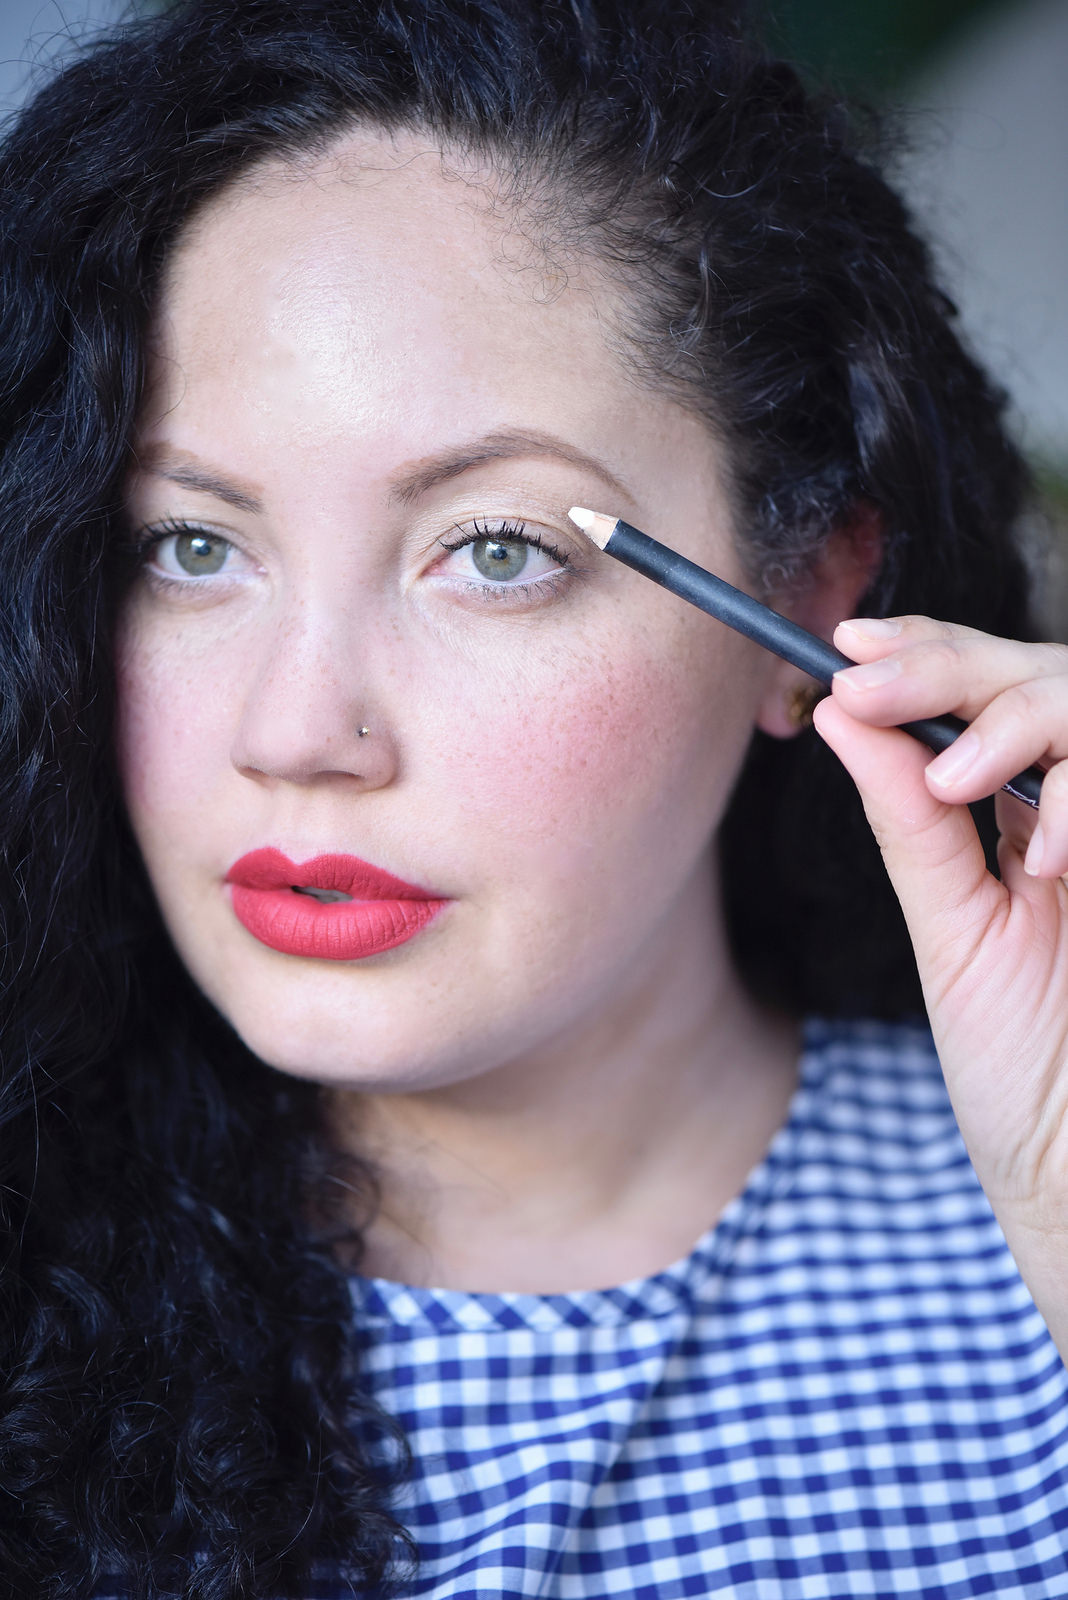 4 Ways to Use White Eyeliner via @GirlWithCurves